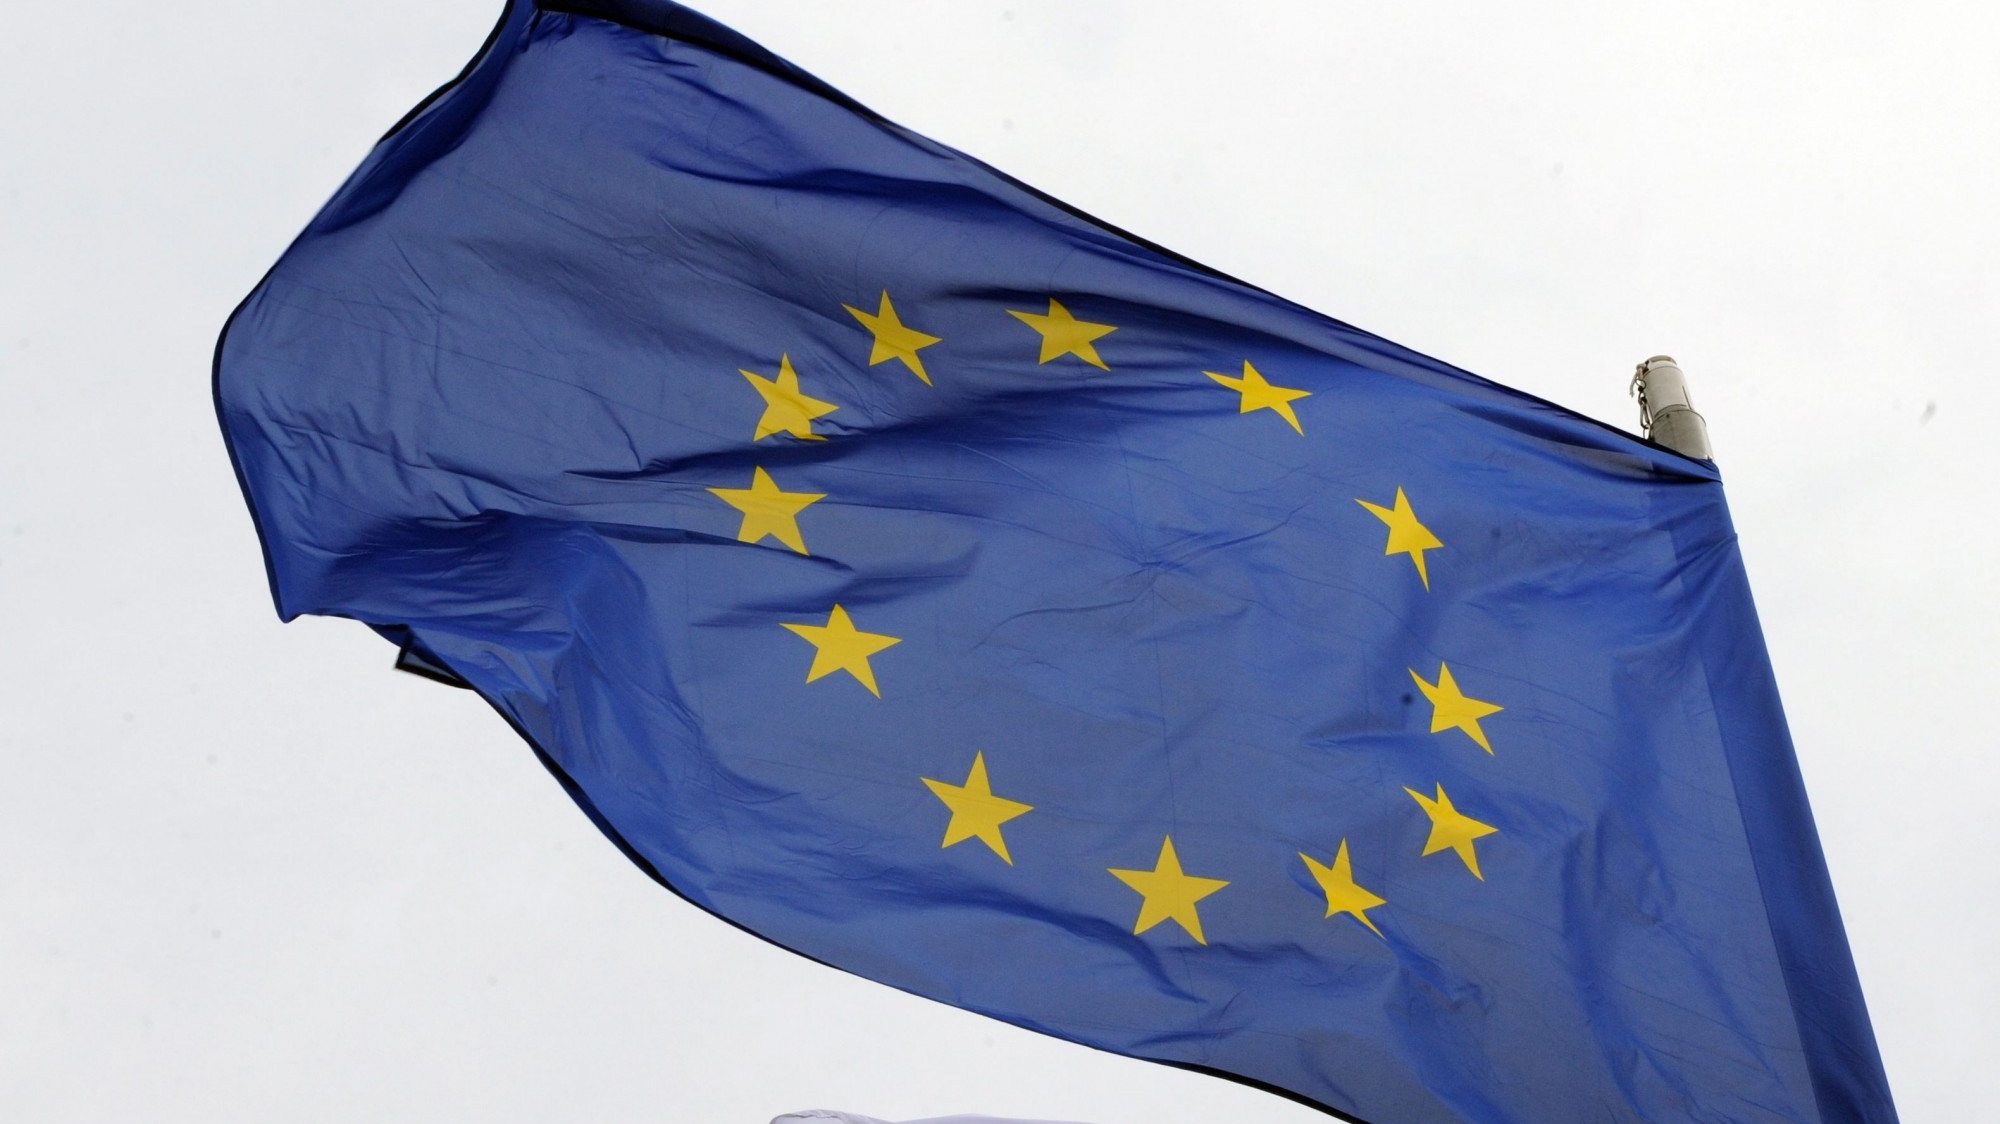 Bandeira da UE